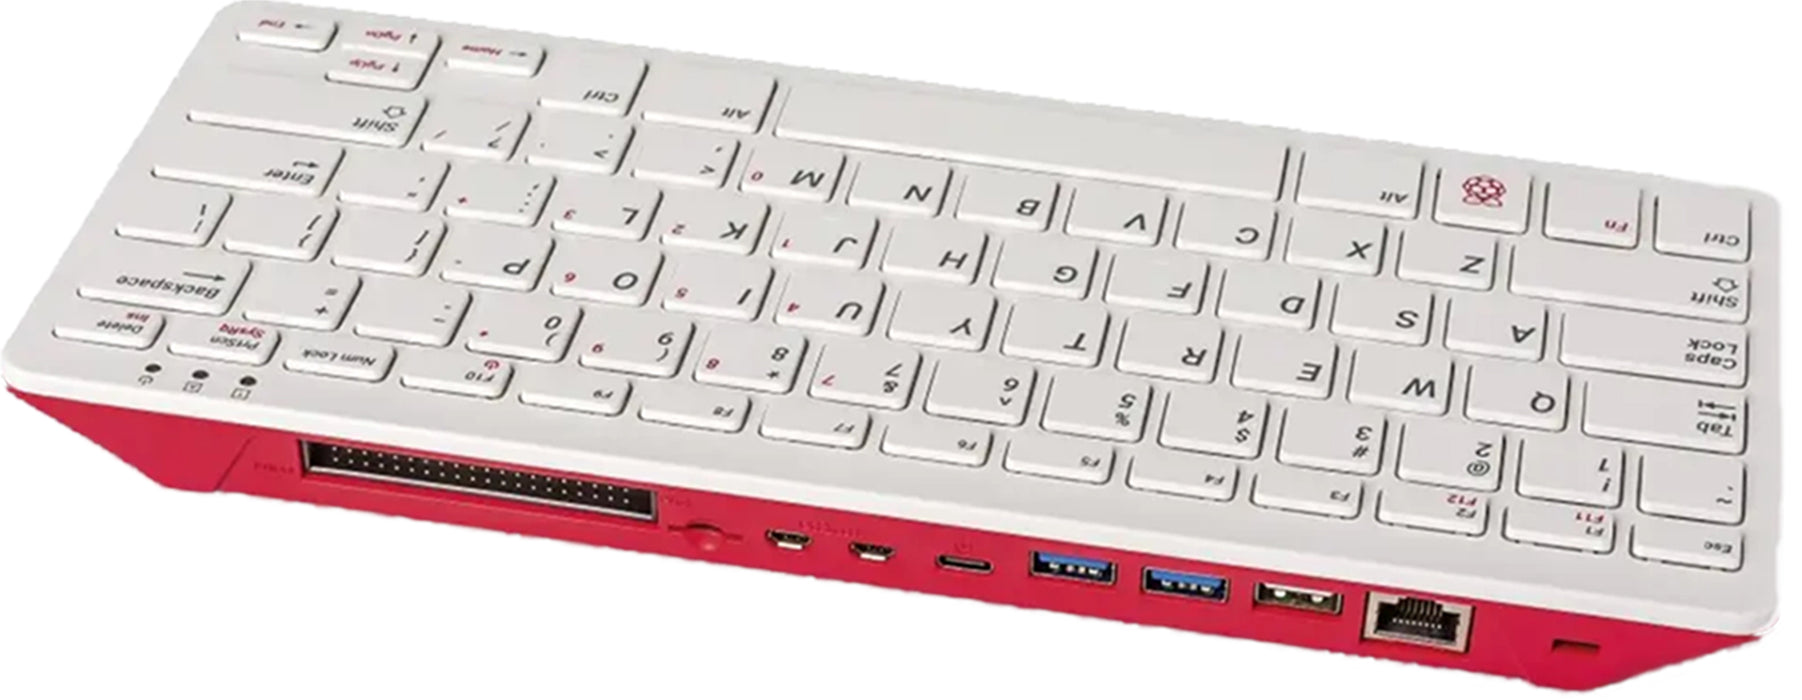 Raspberry Pi 400 Computer